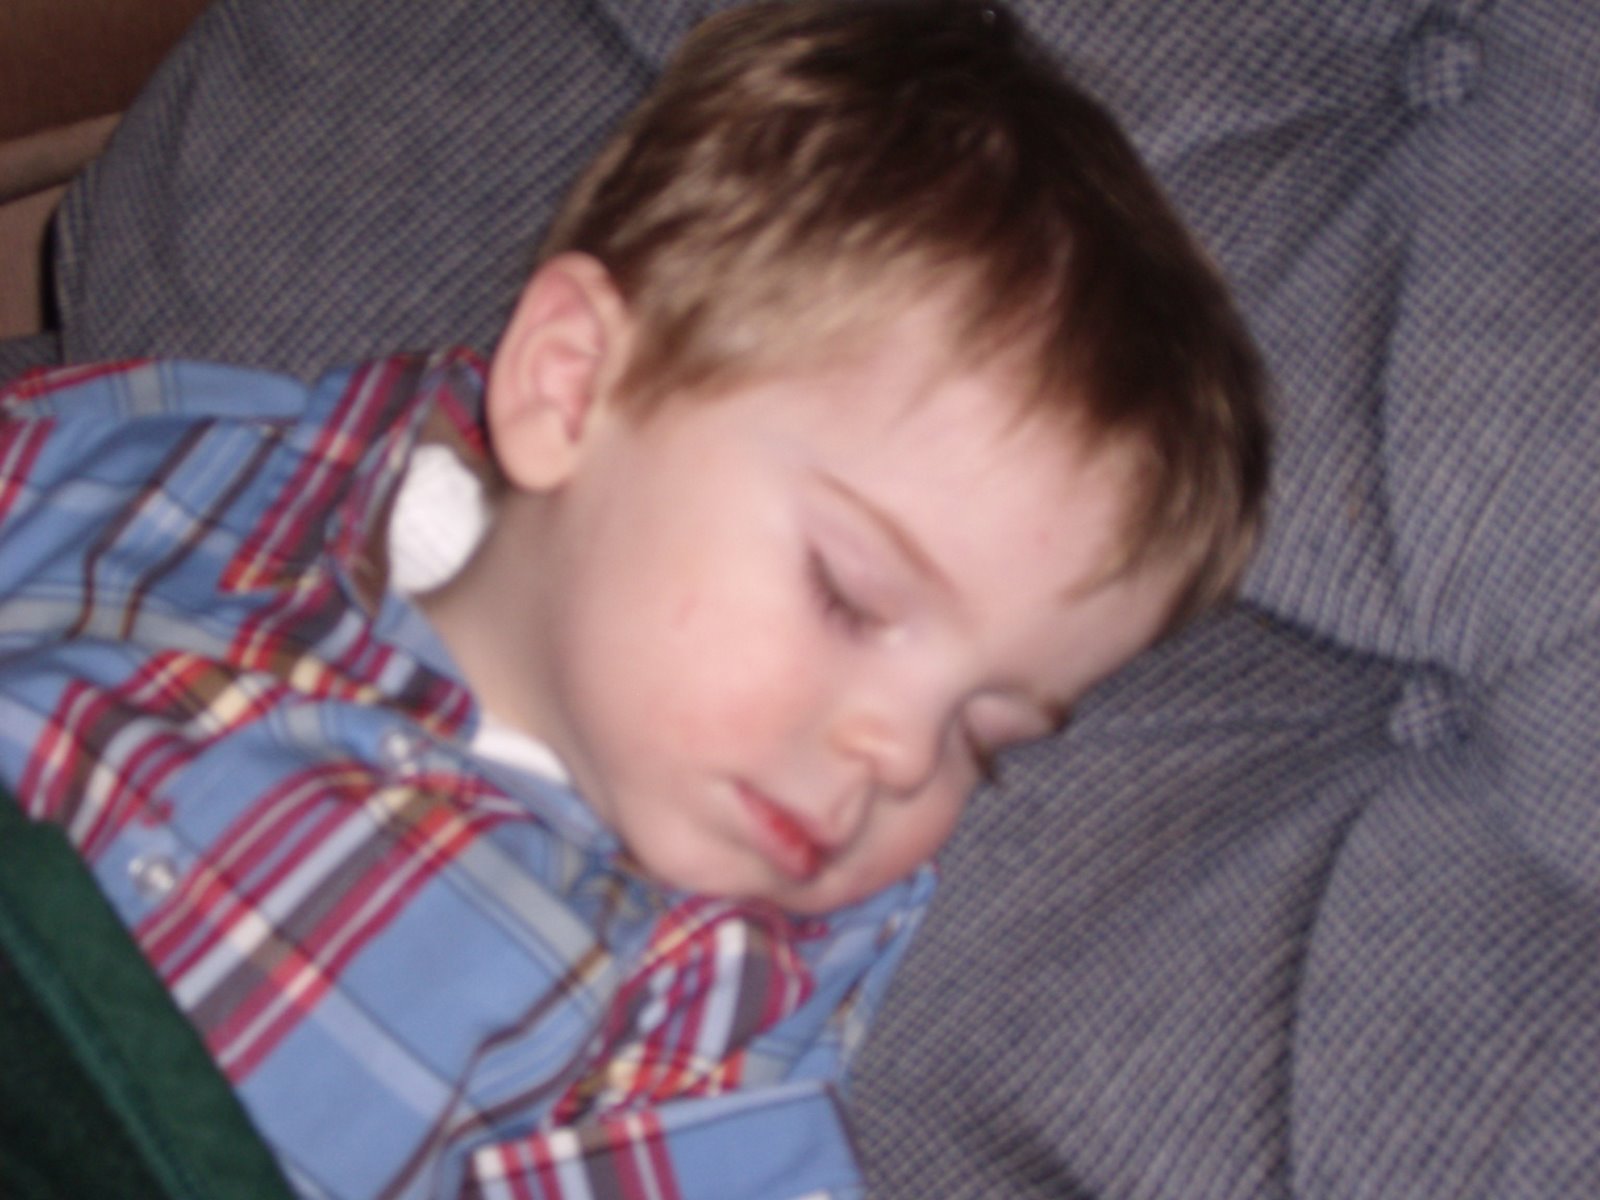 [Carter+sleeping+in+recliner.jpg]